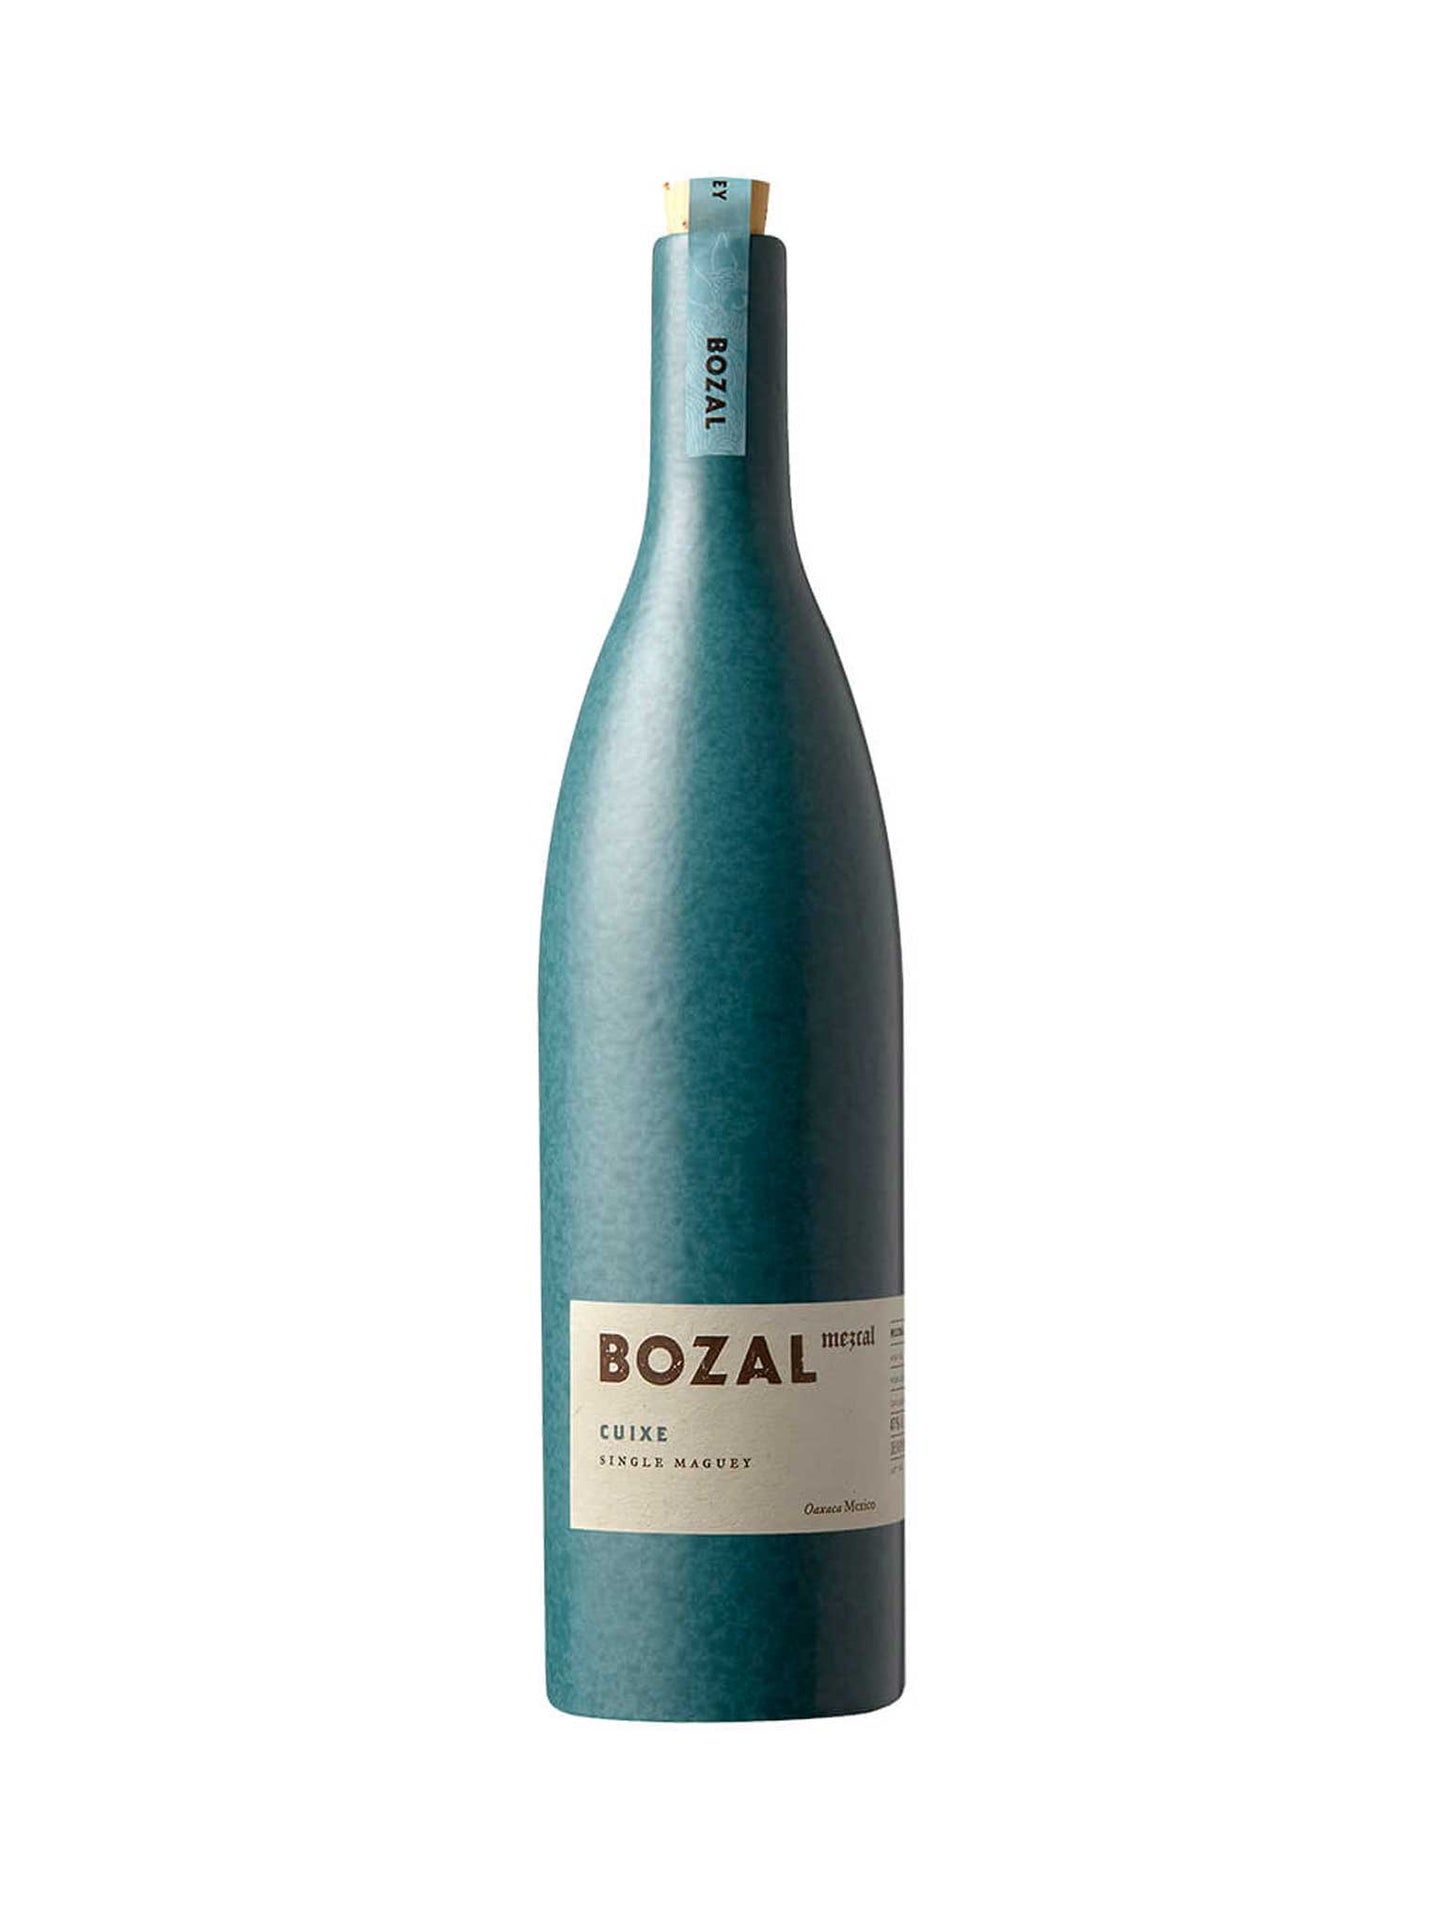 BOZAL Mezcal Cuishe Single Maguey 750mL